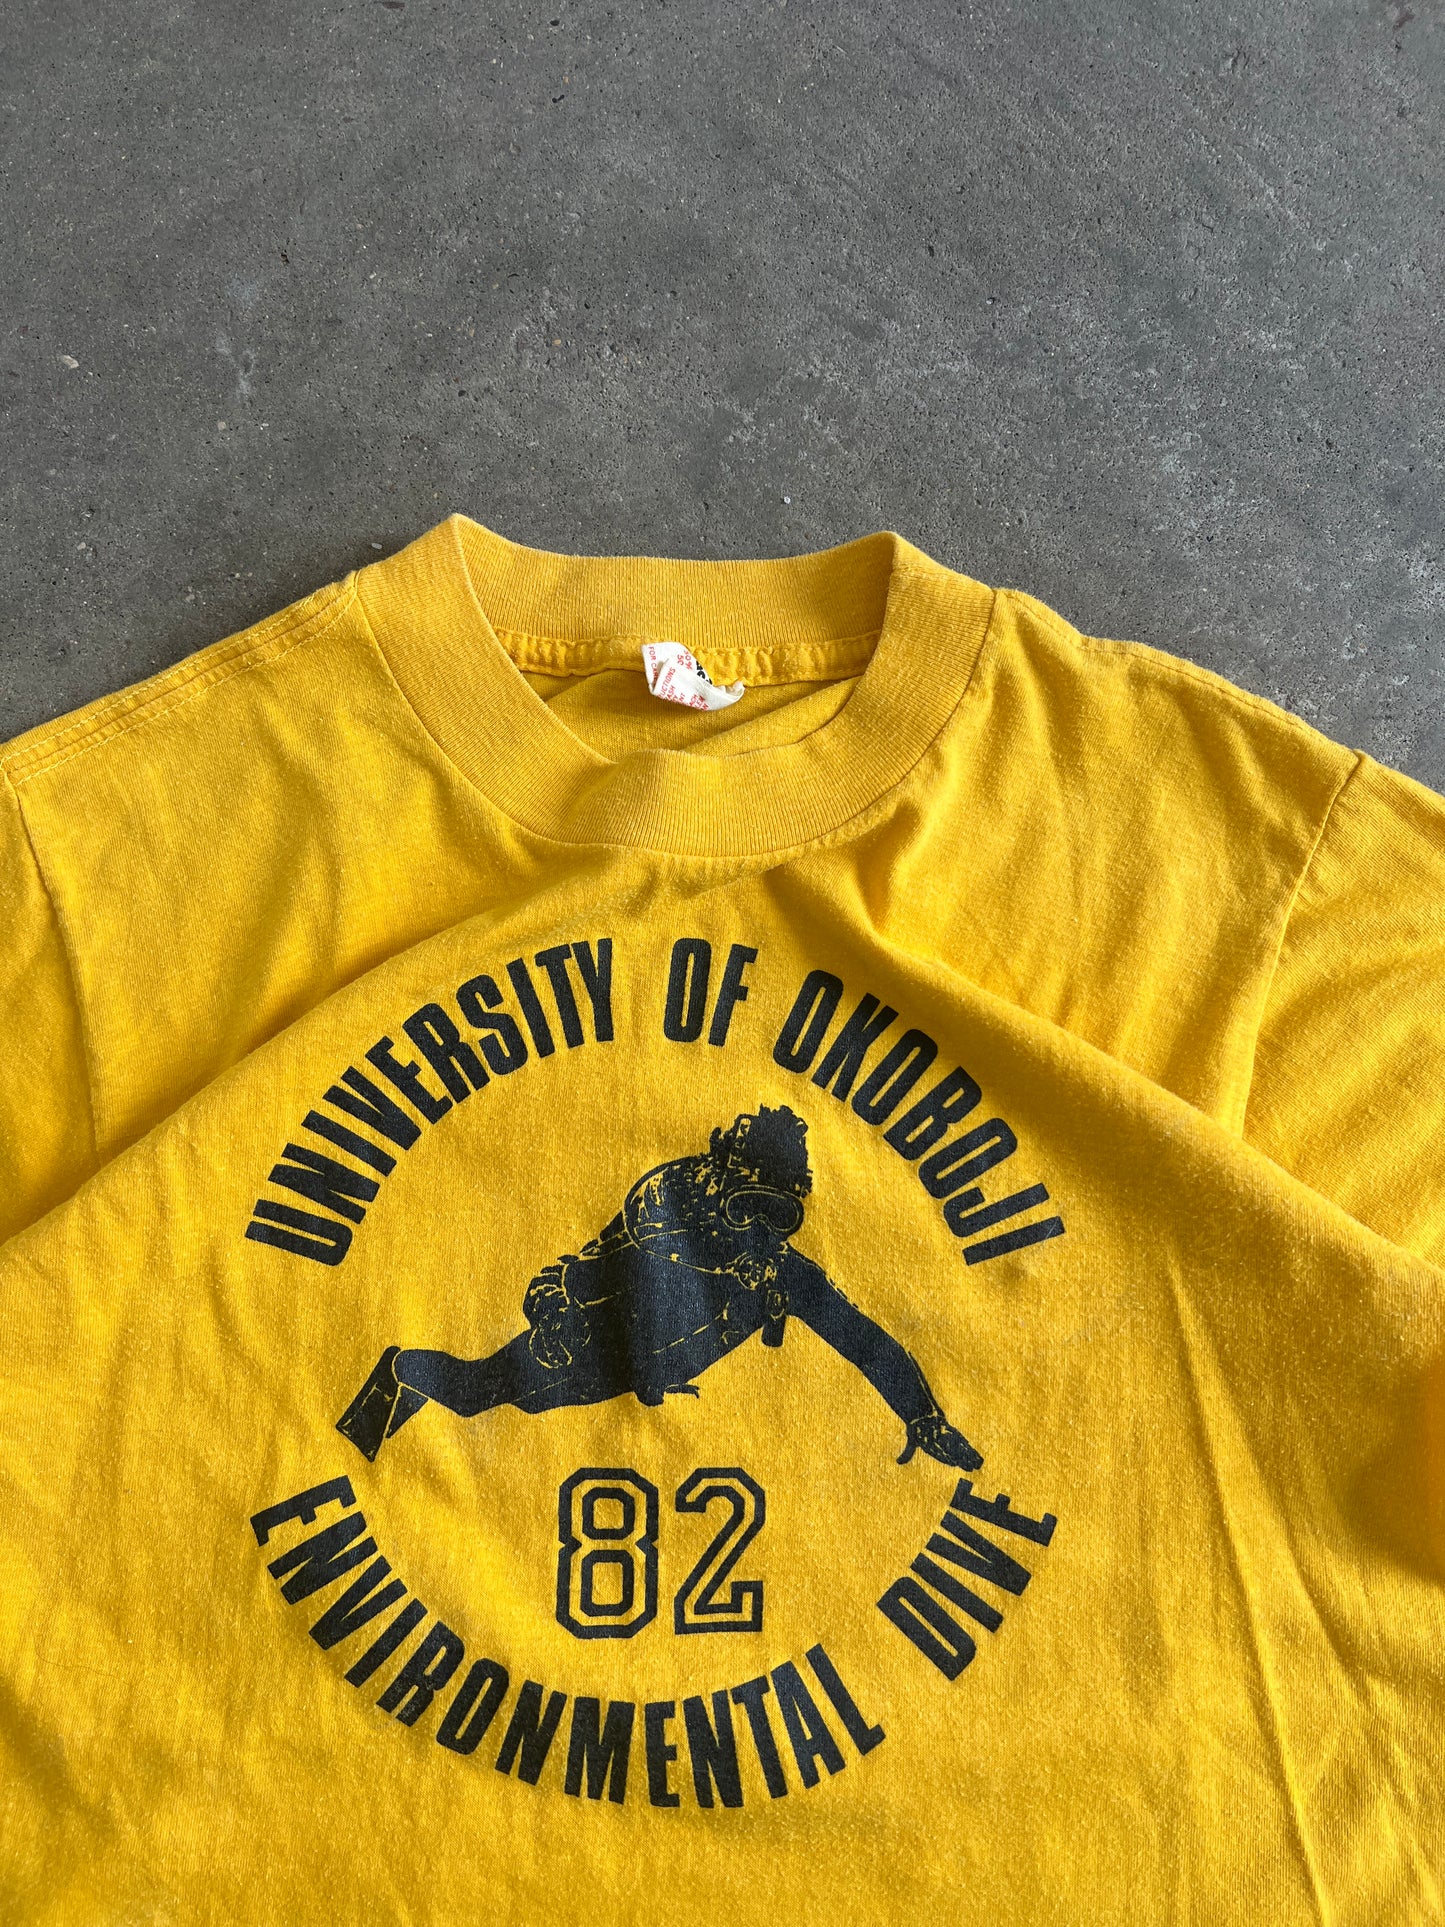 Vintage Okoboji University Shirt - L